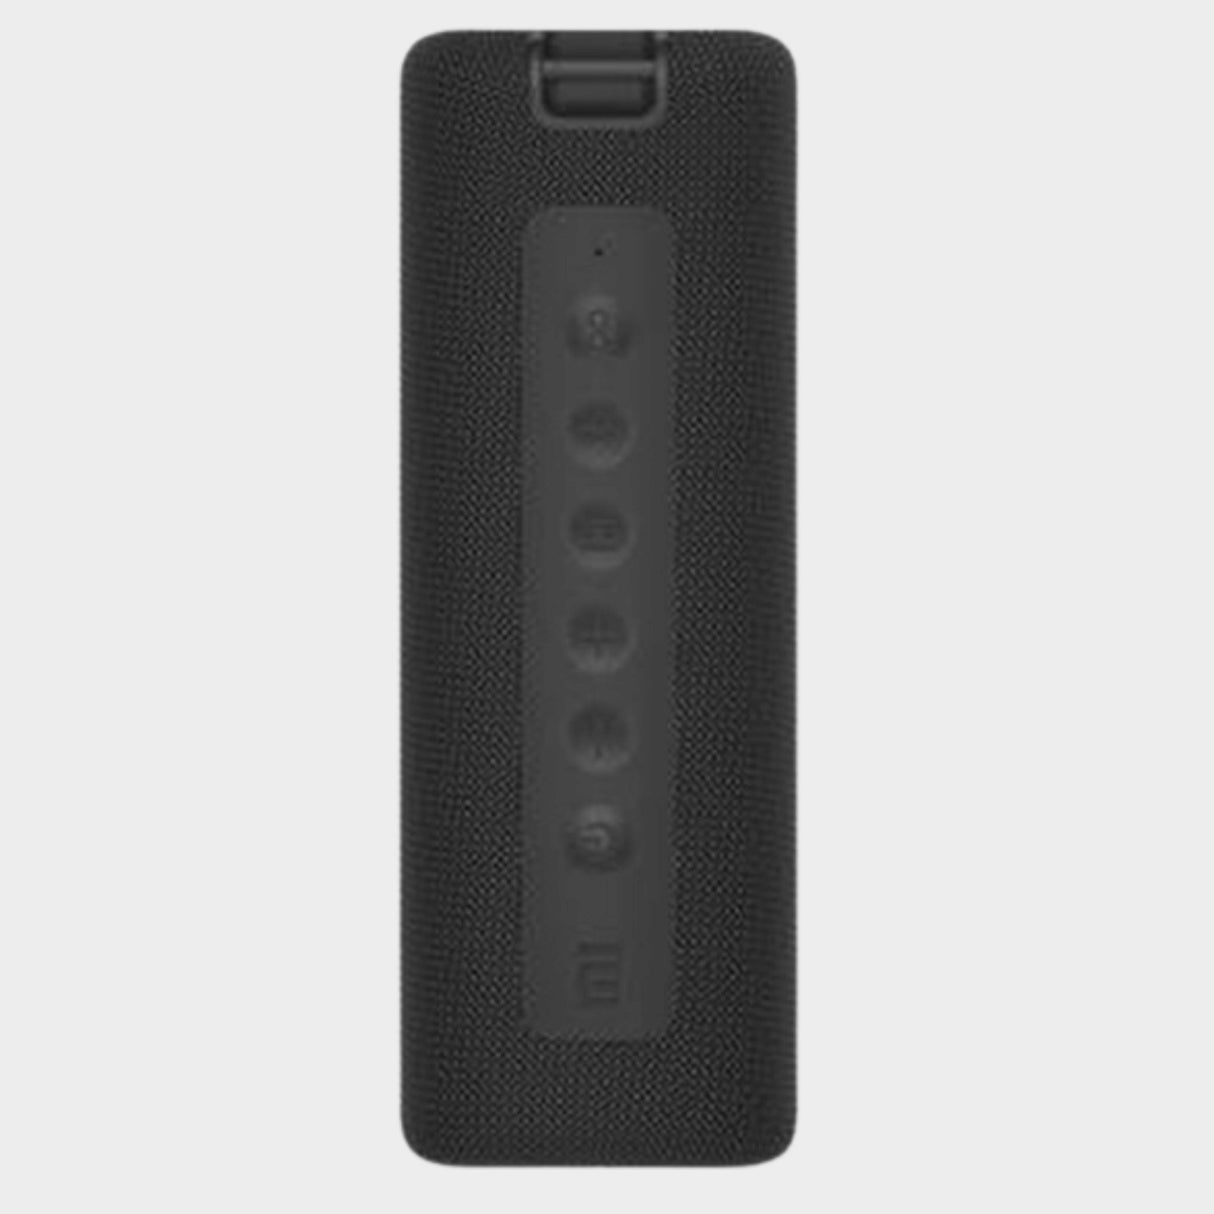 MI Portable Bluetooth Speaker 16W- Black - KWT Tech Mart